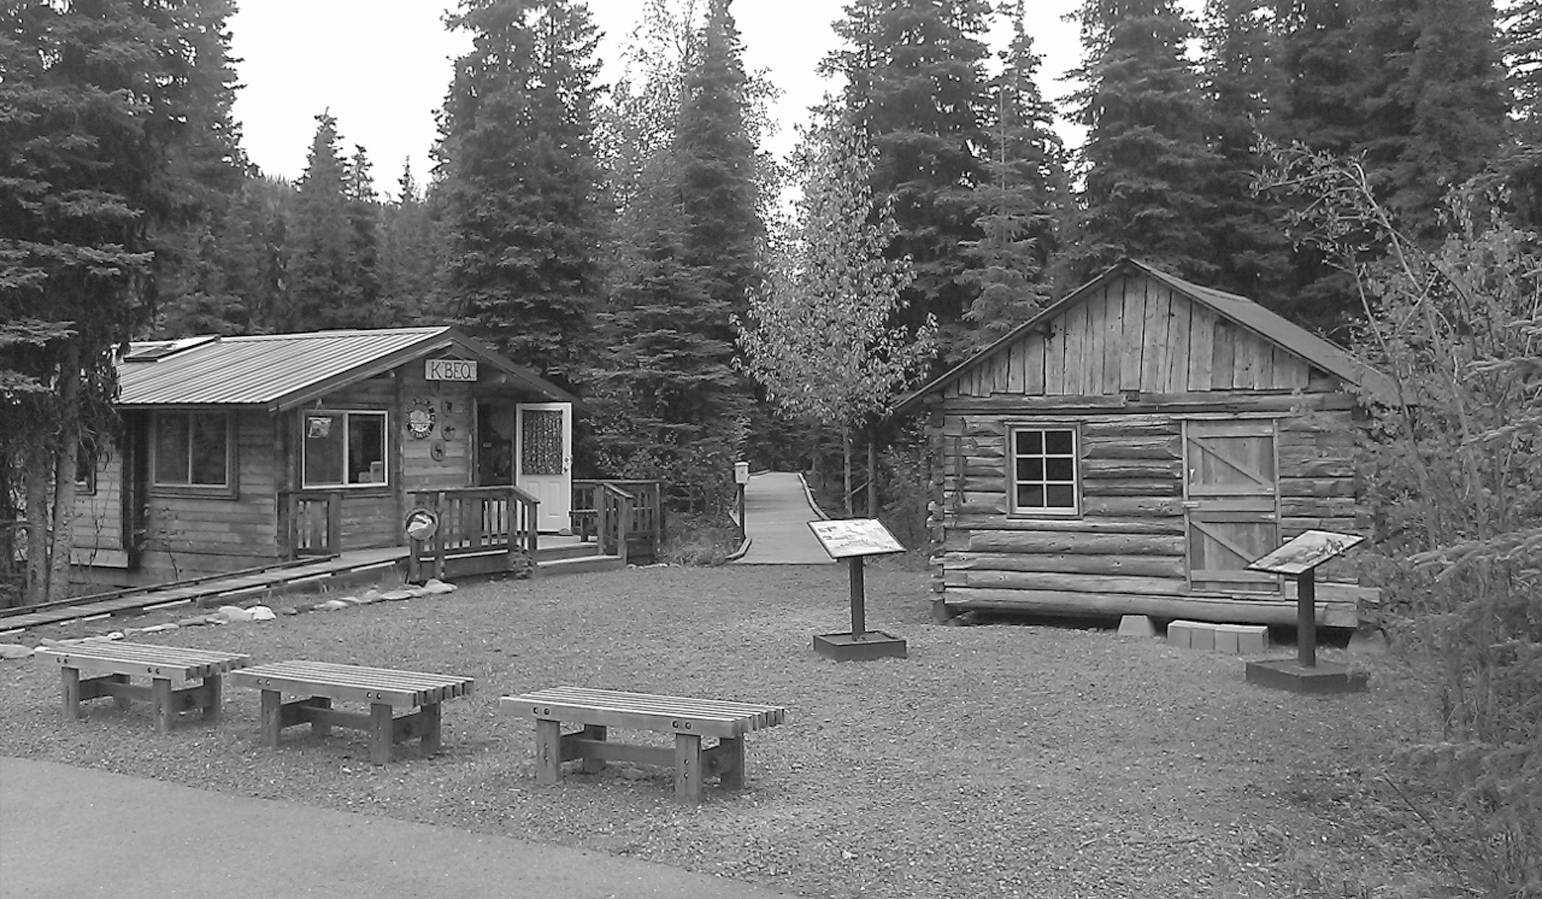 The Darien-Lindgren Cabin now rebuilt and restored at the K’beq’ Interpretive Site on the Upper Kenai River. (Photo provided)